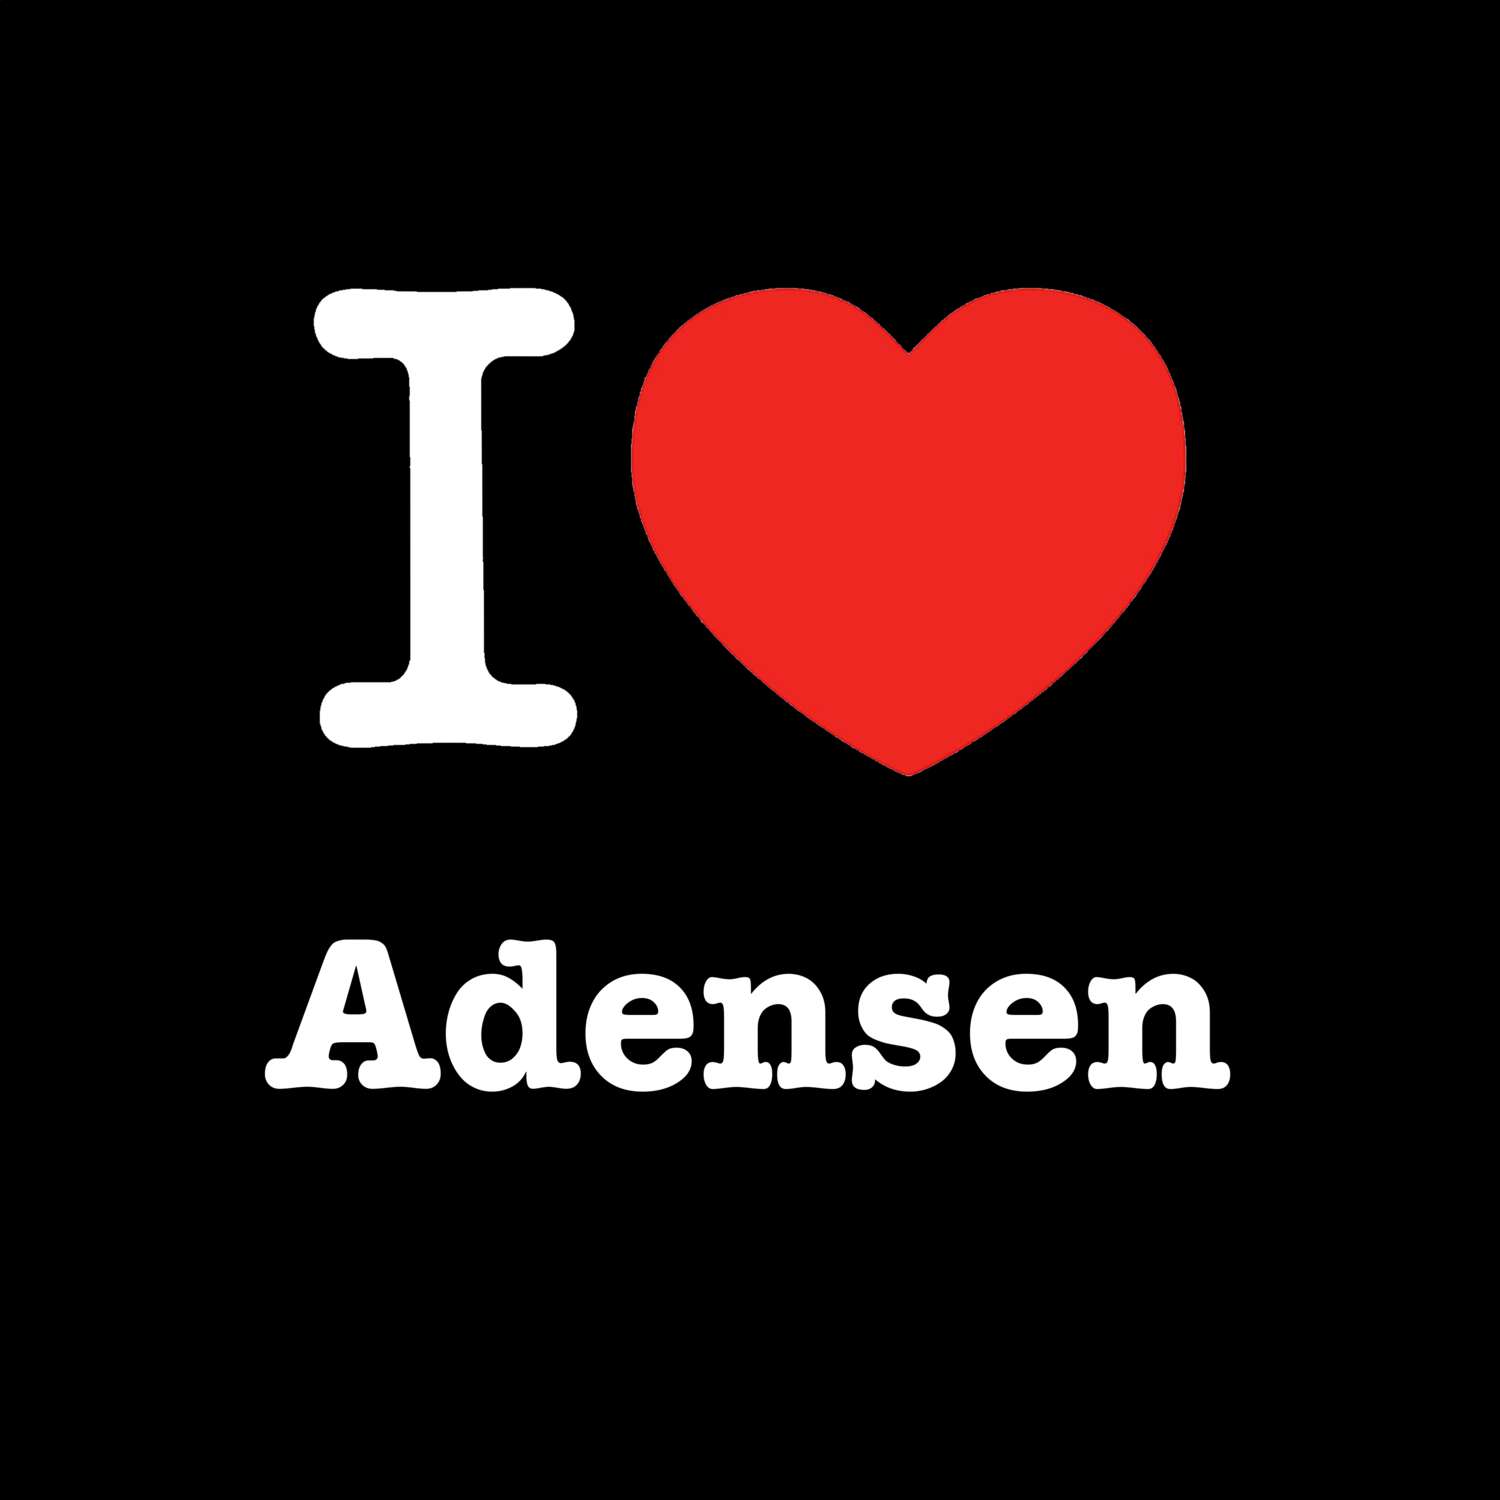 Adensen T-Shirt »I love«